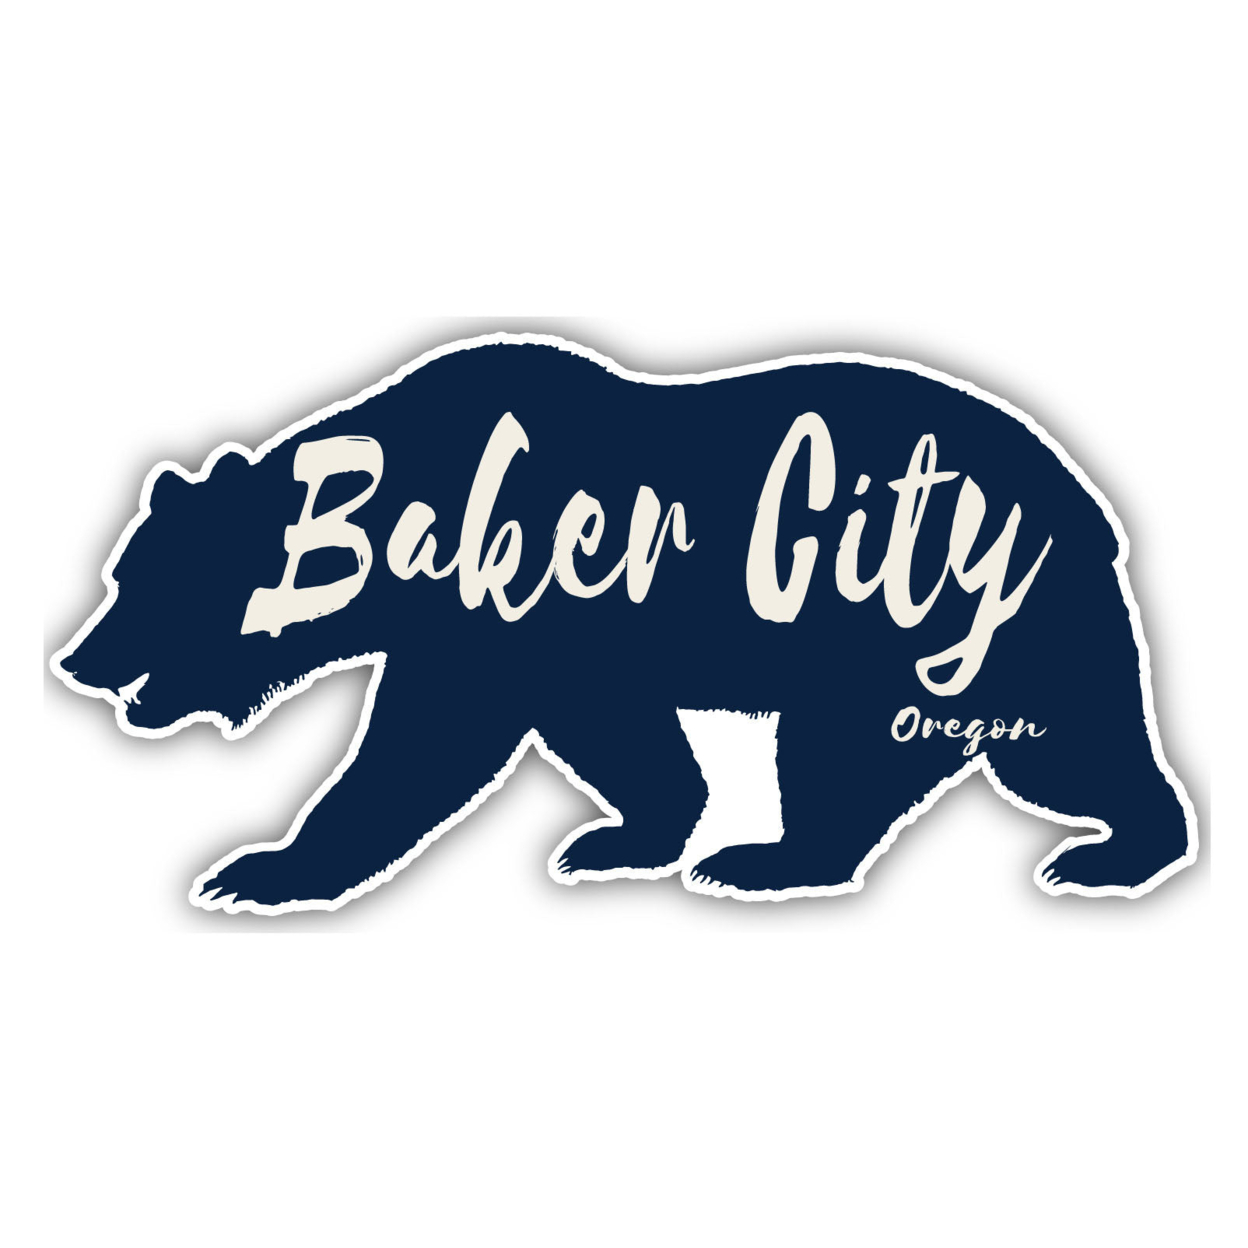 Baker City Oregon Souvenir Decorative Stickers (Choose Theme And Size) - Single Unit, 12-Inch, Bear